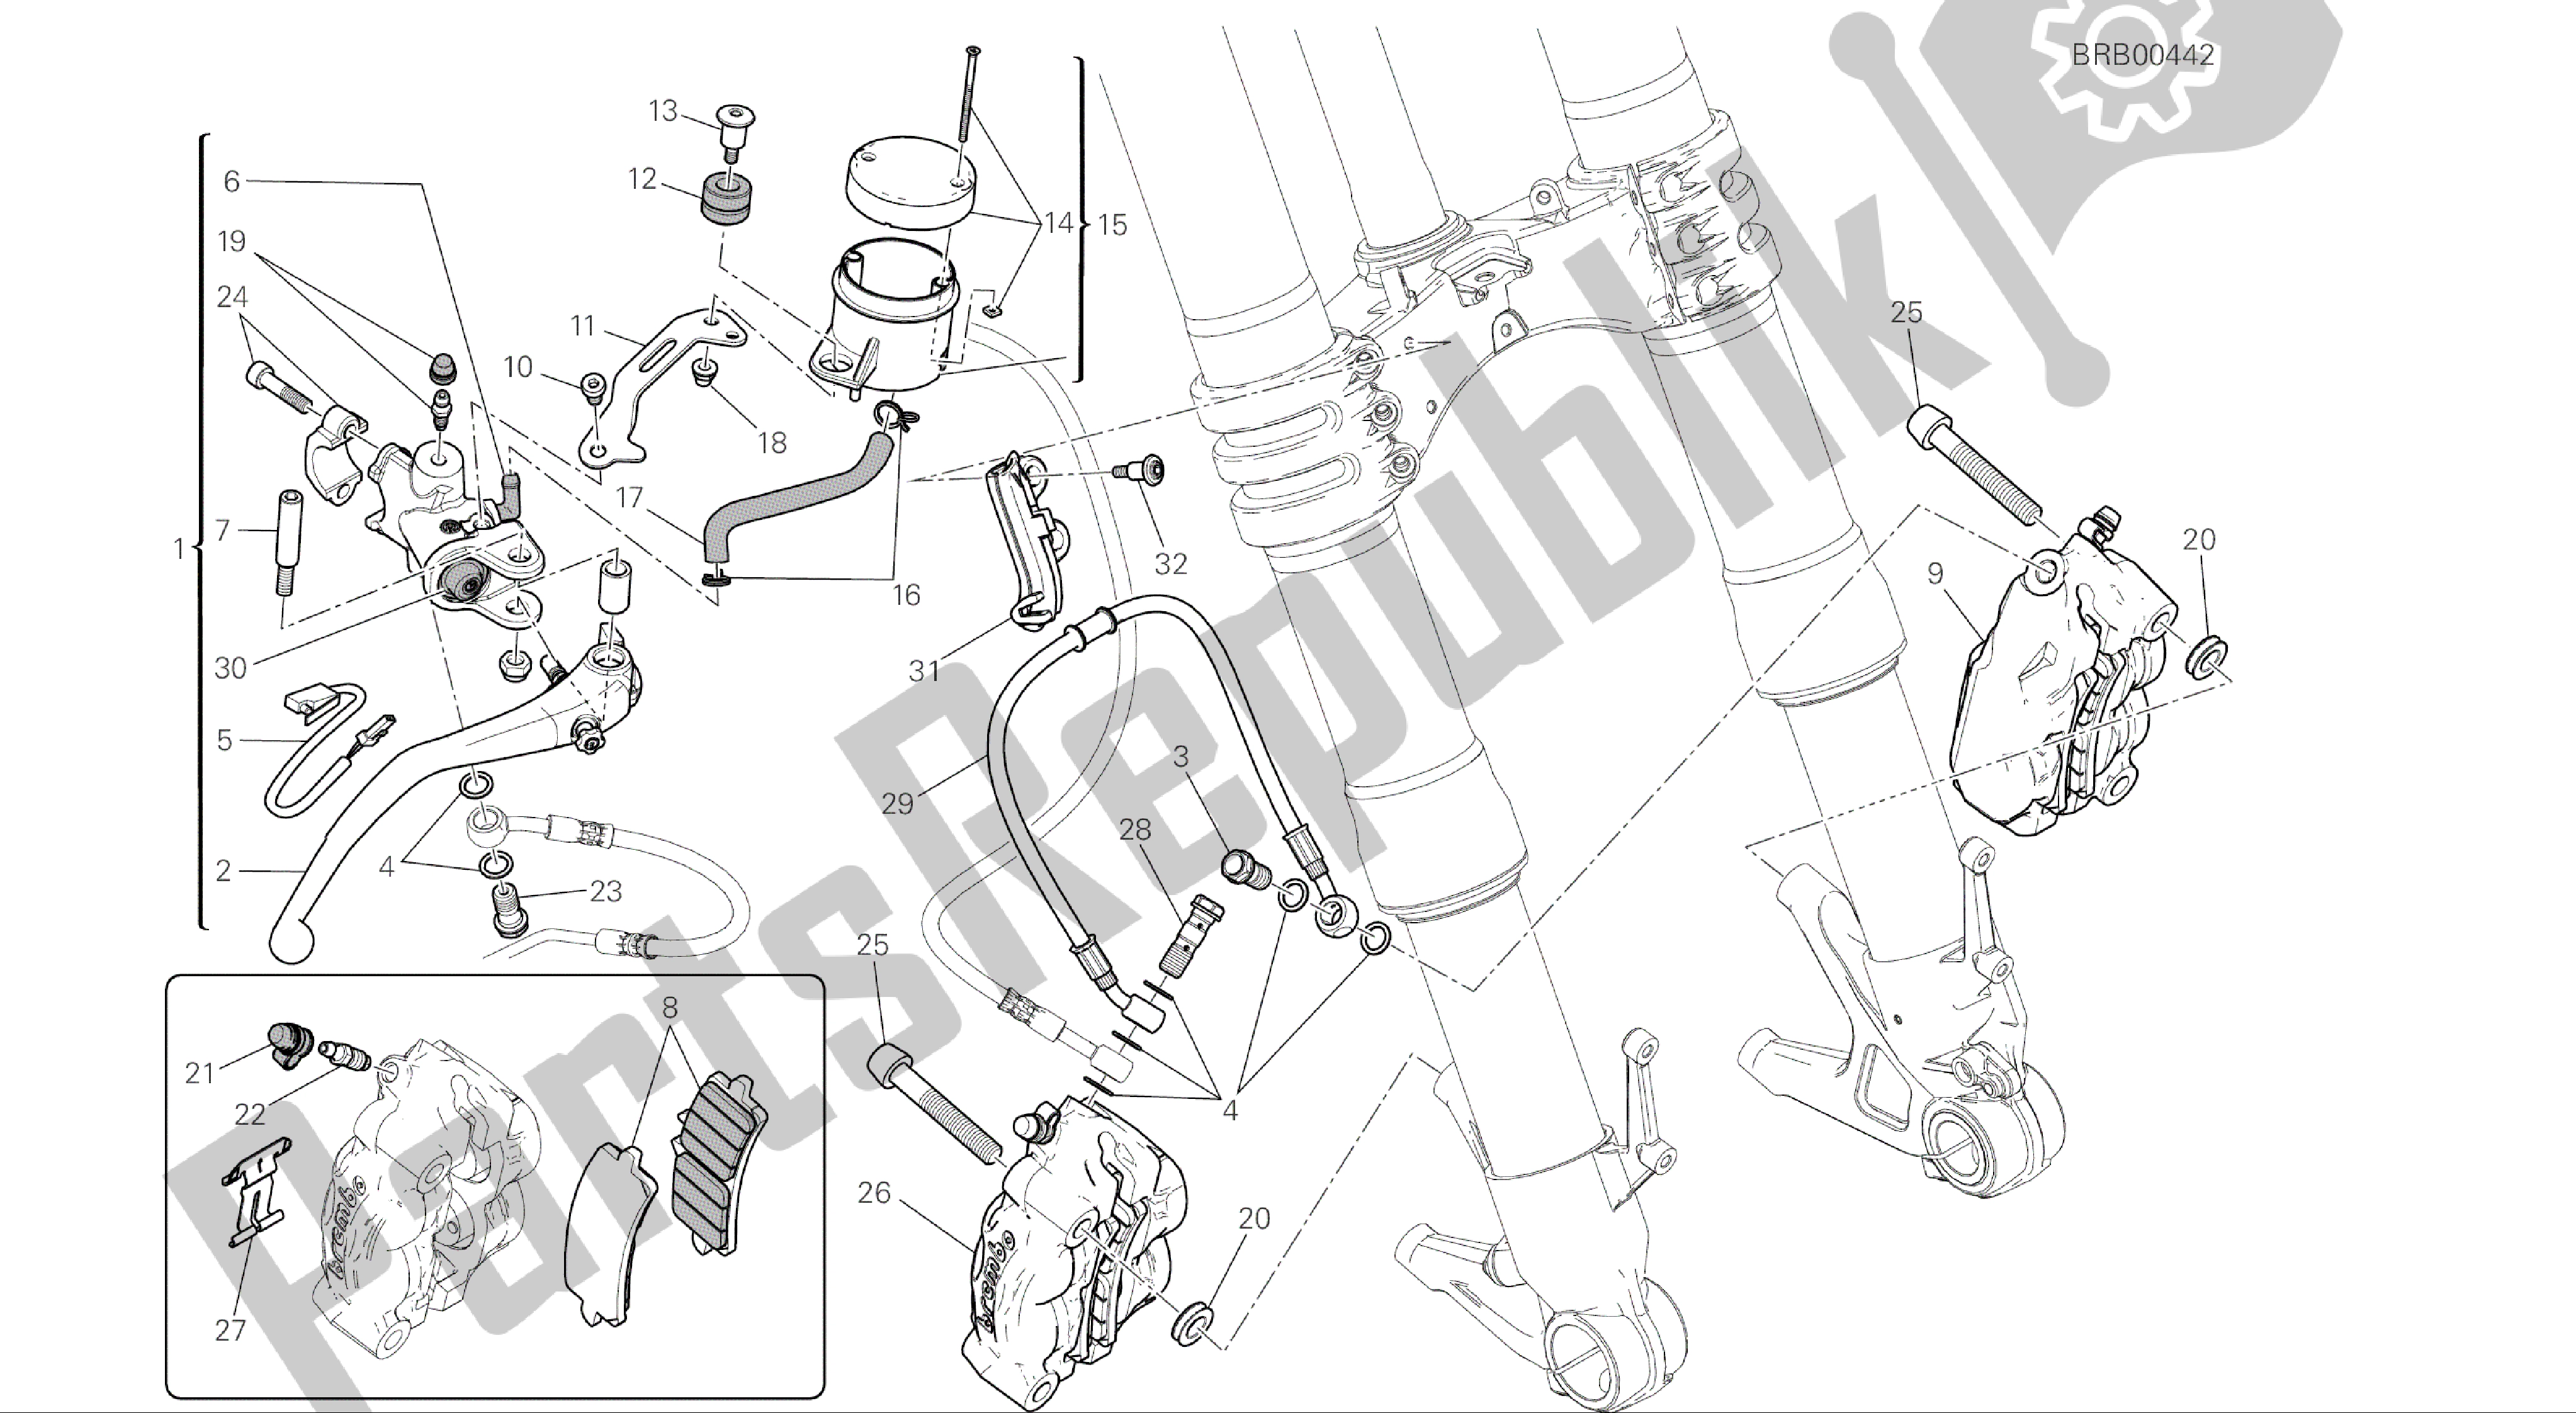 Alle onderdelen voor de Tekening 024 - Freno Anteriore [mod: 1299; Xst: Aus, Eur, Fra, Jap, Twn] Groepsframe van de Ducati Panigale ABS 1299 2016